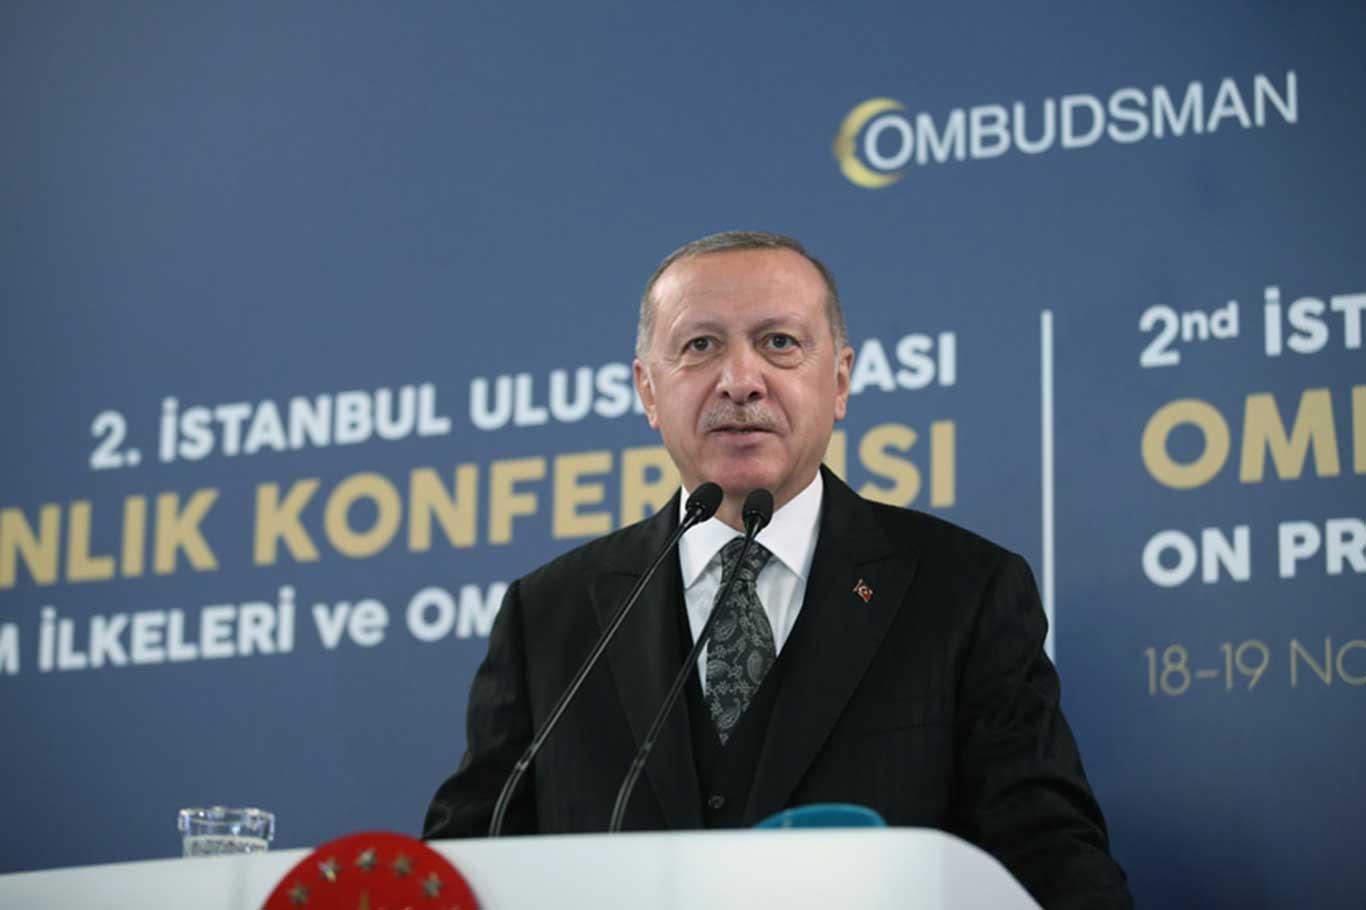  Erdoğan makes a speech at International Ombudsman Conference